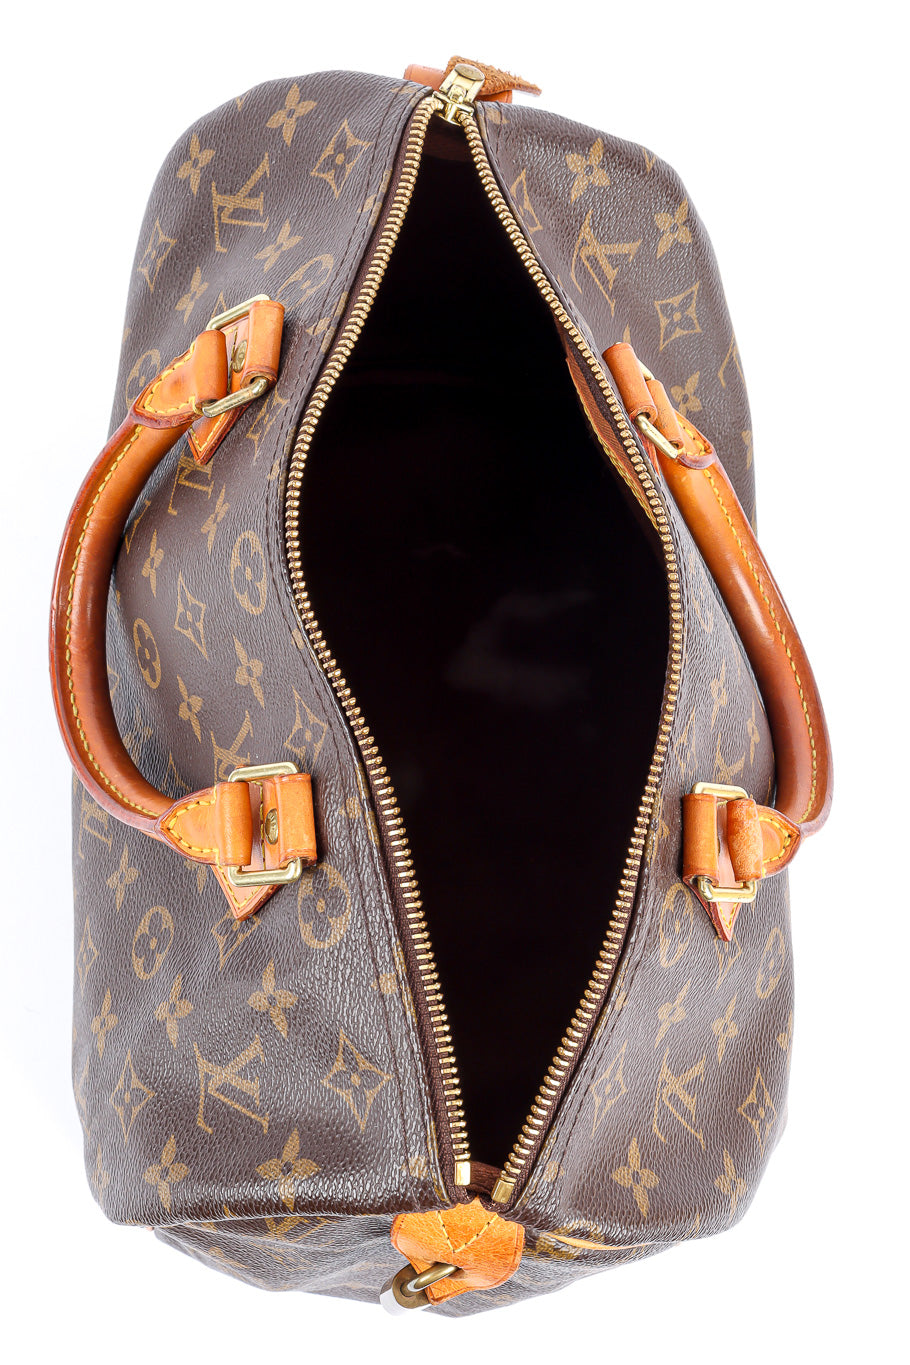 Louis Vuitton classic monogram speedy 30 bag zipper detail @recessla